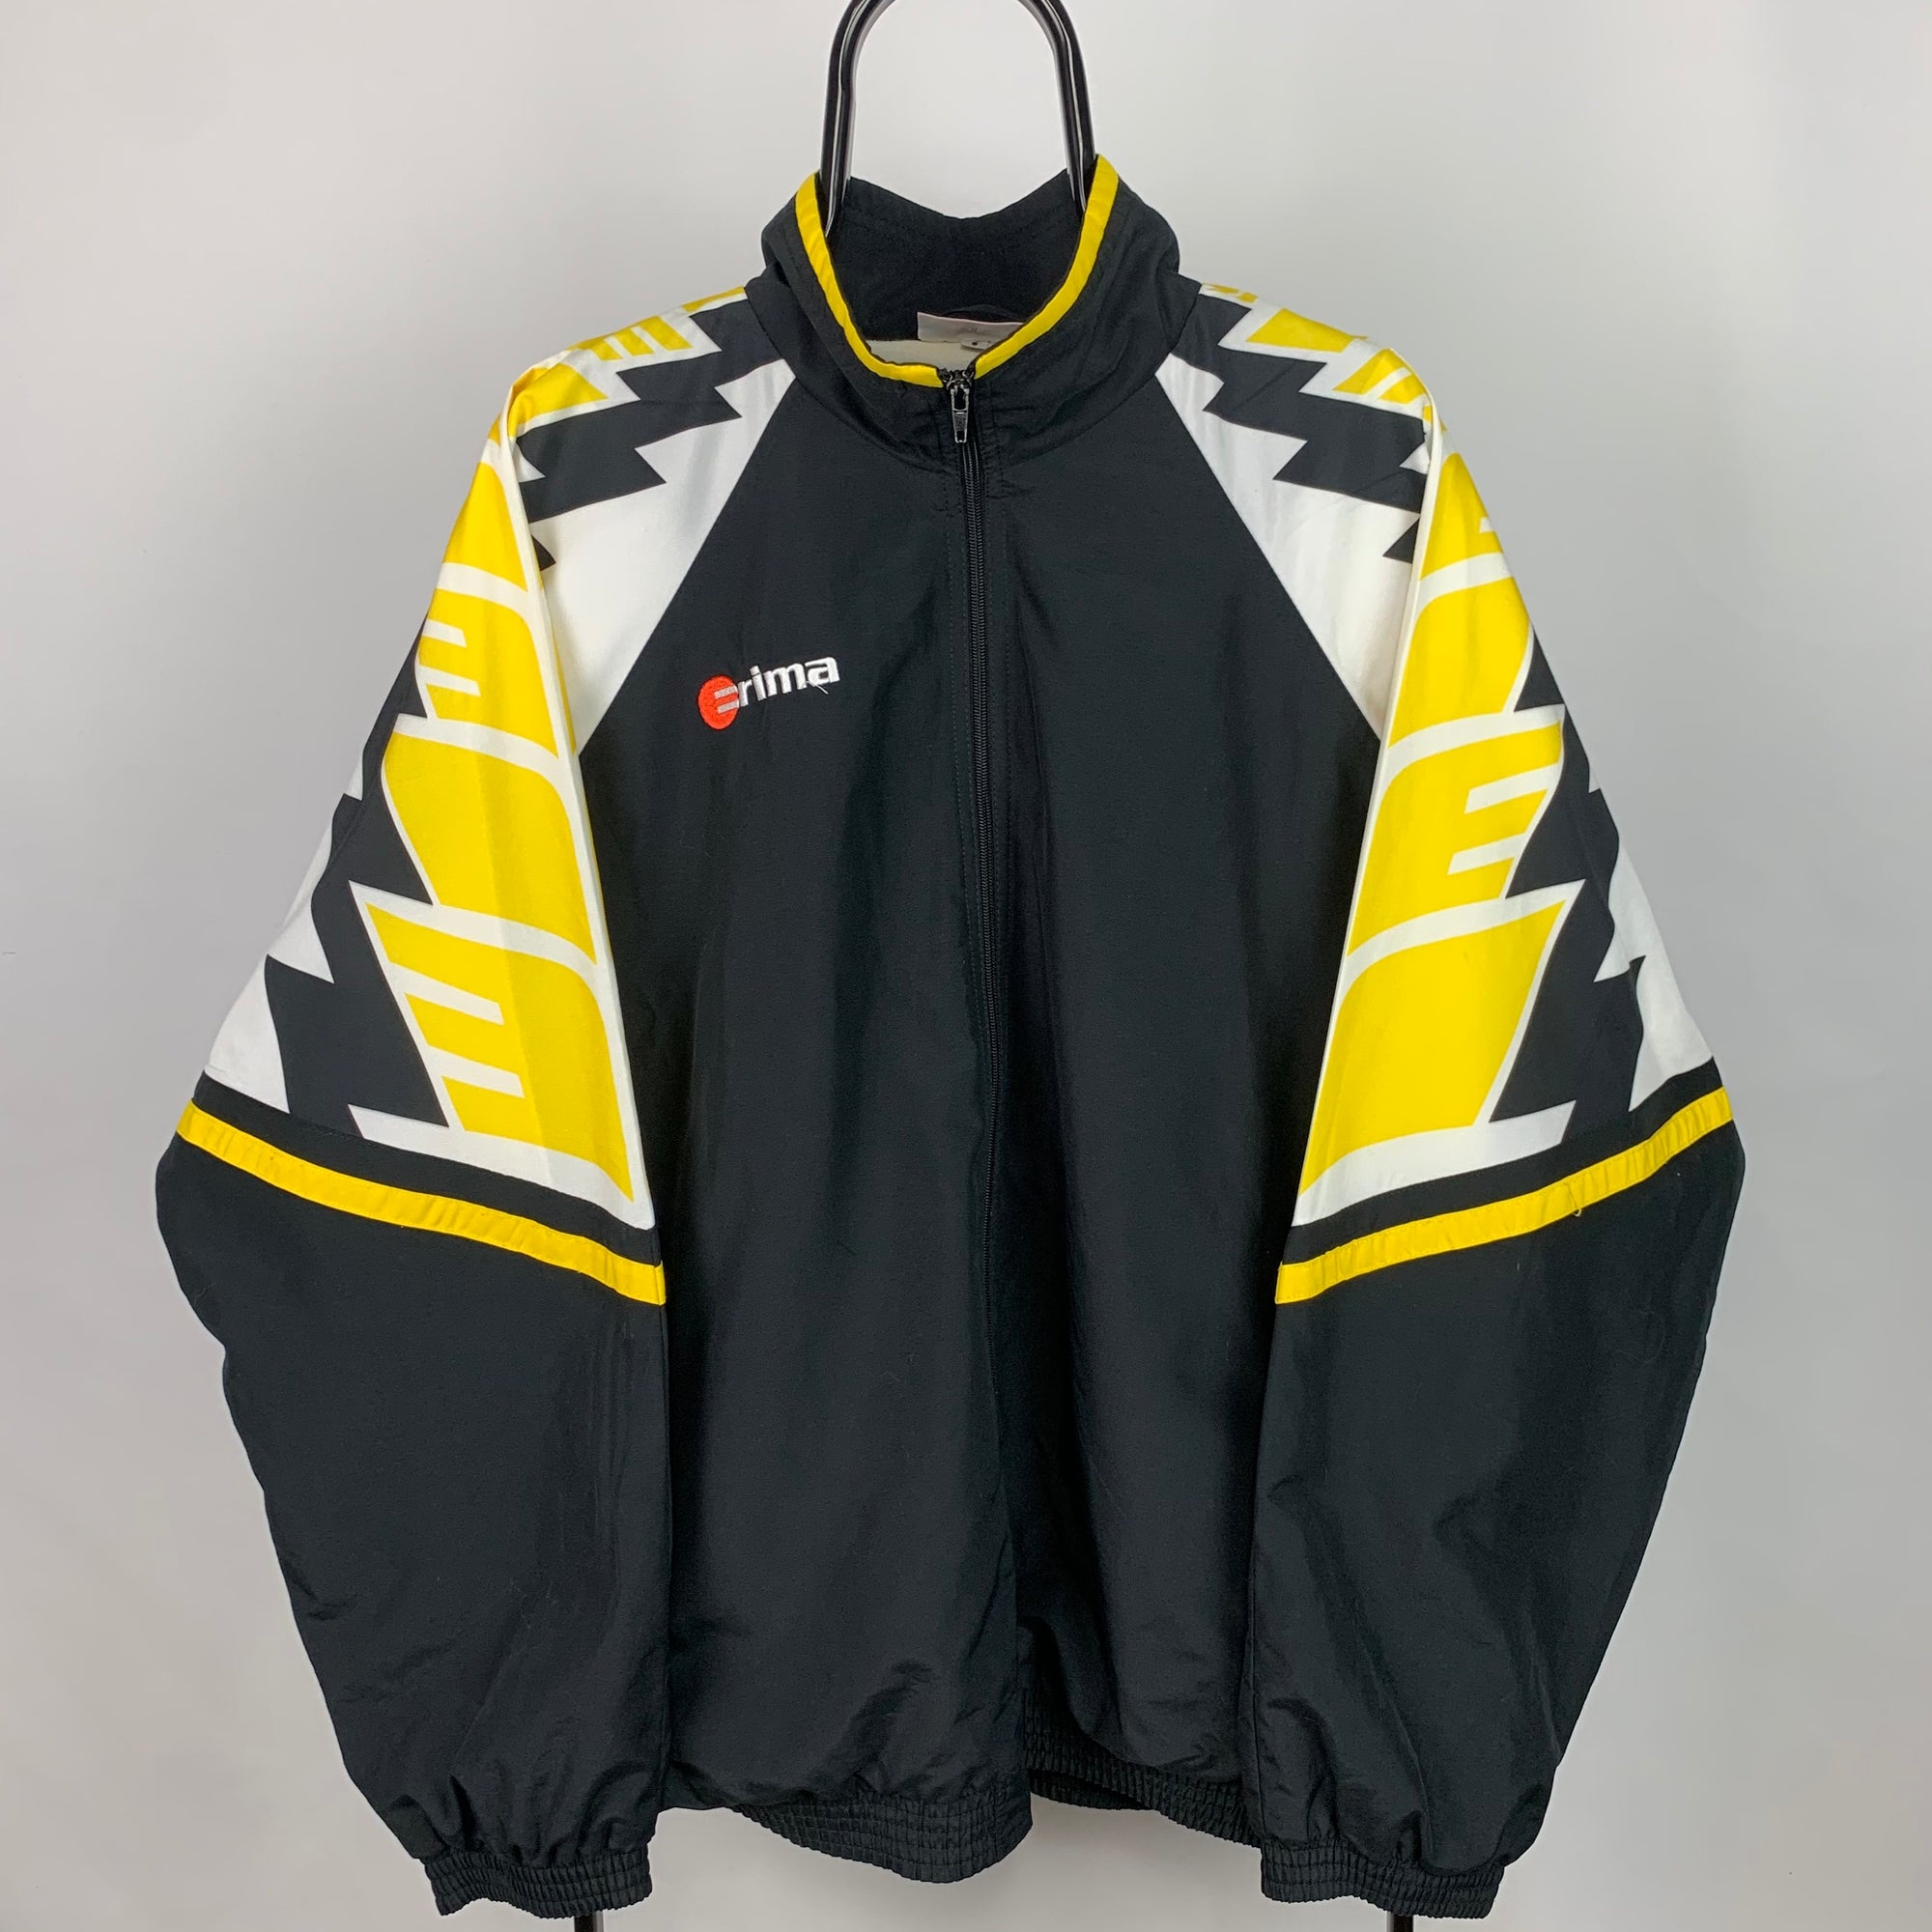 Vintage 90s Erima Track Jacket - Men's XL/Women's XXL